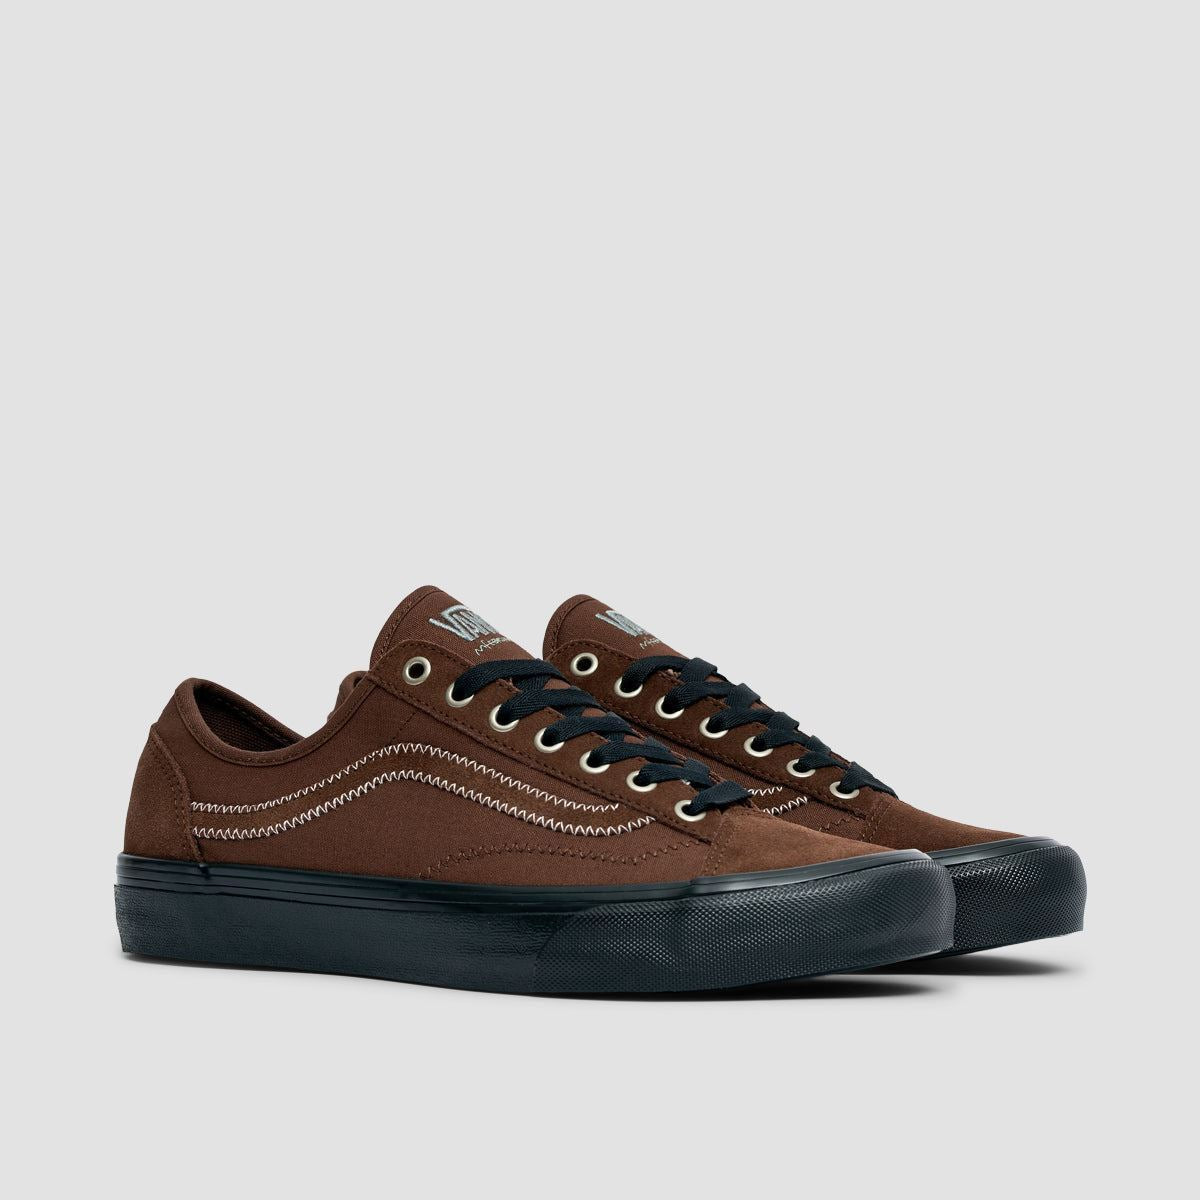 Vans Style 36 Decon VR3 SF Shoes - Michael February Dark Brown/Black